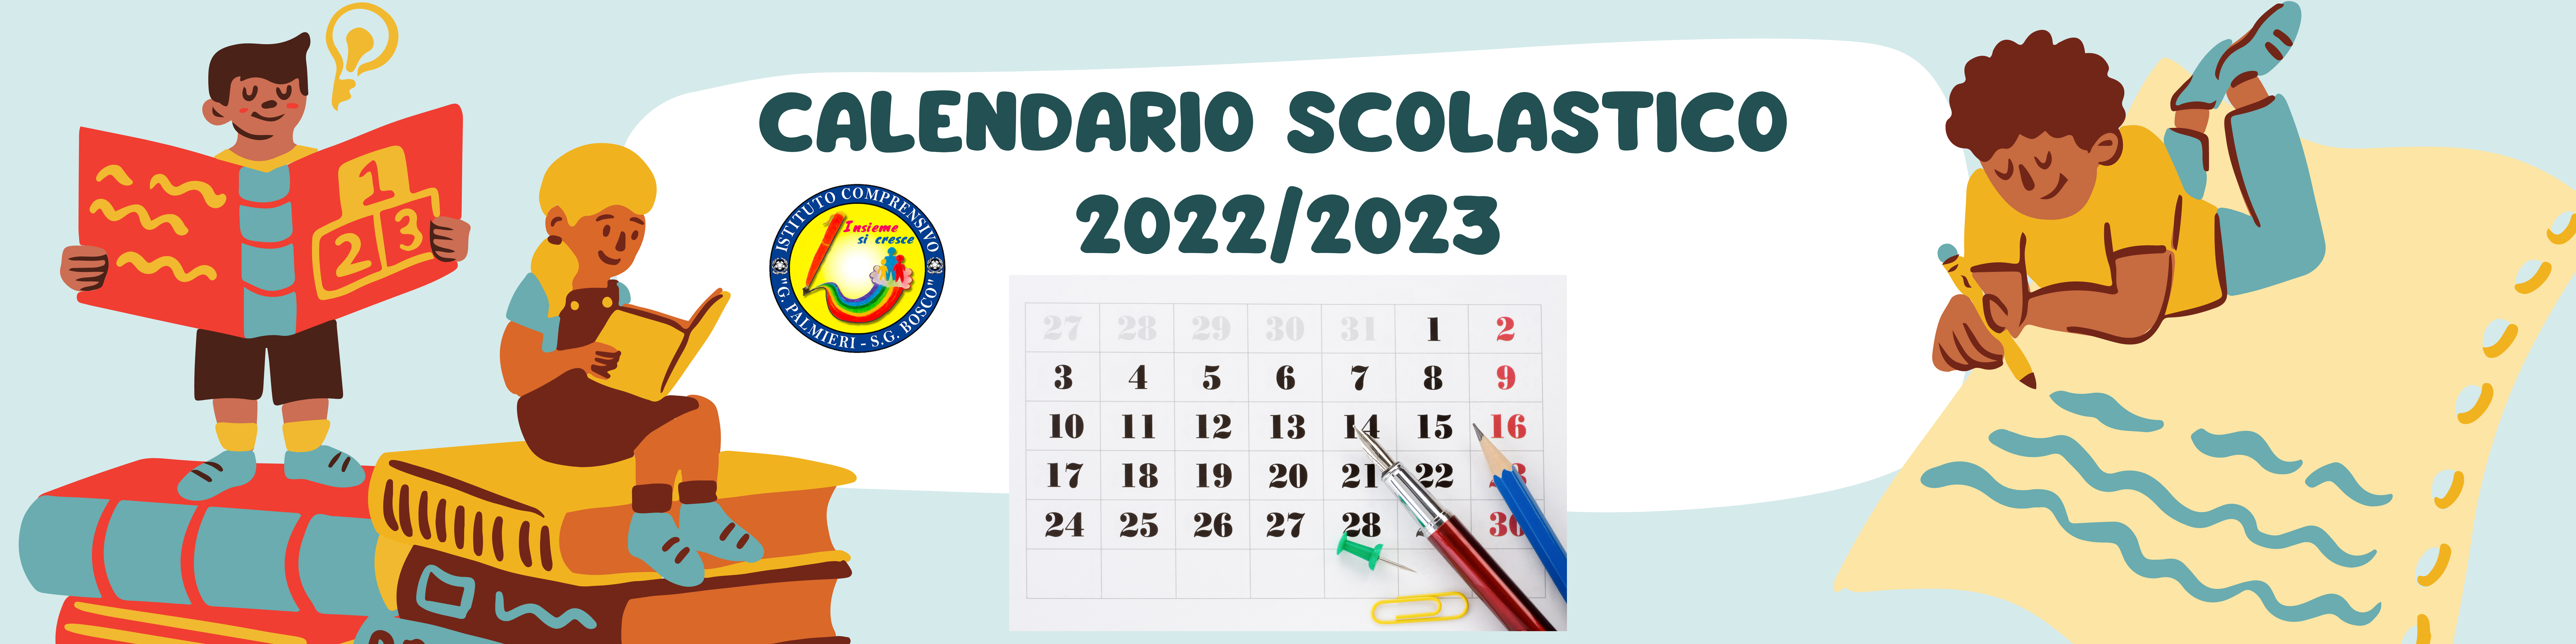 Calendario Scolastico 2022/2023